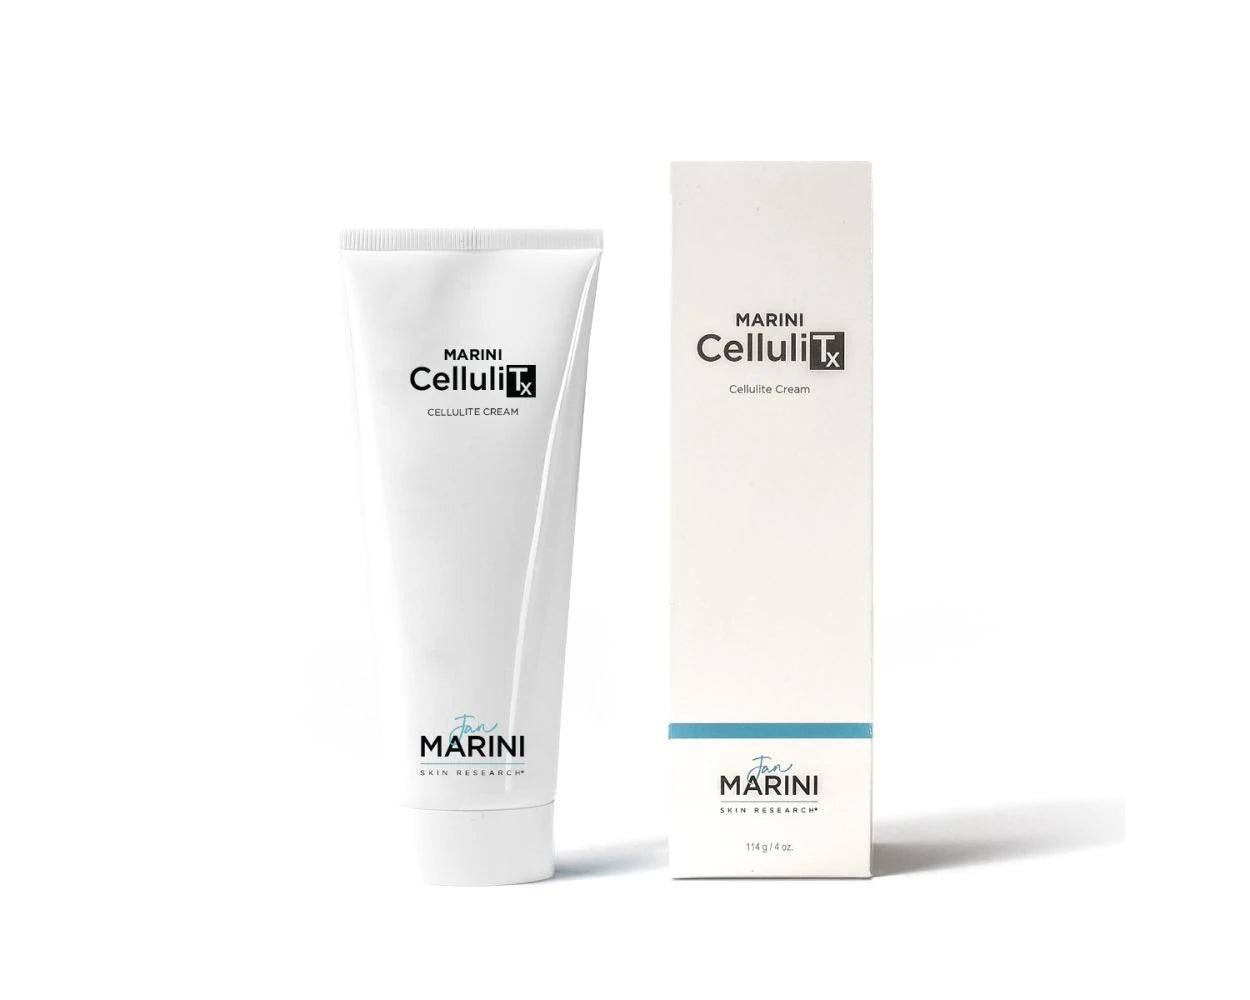 Jan Marini Crème Cellulite Marini CelluliTx 114g